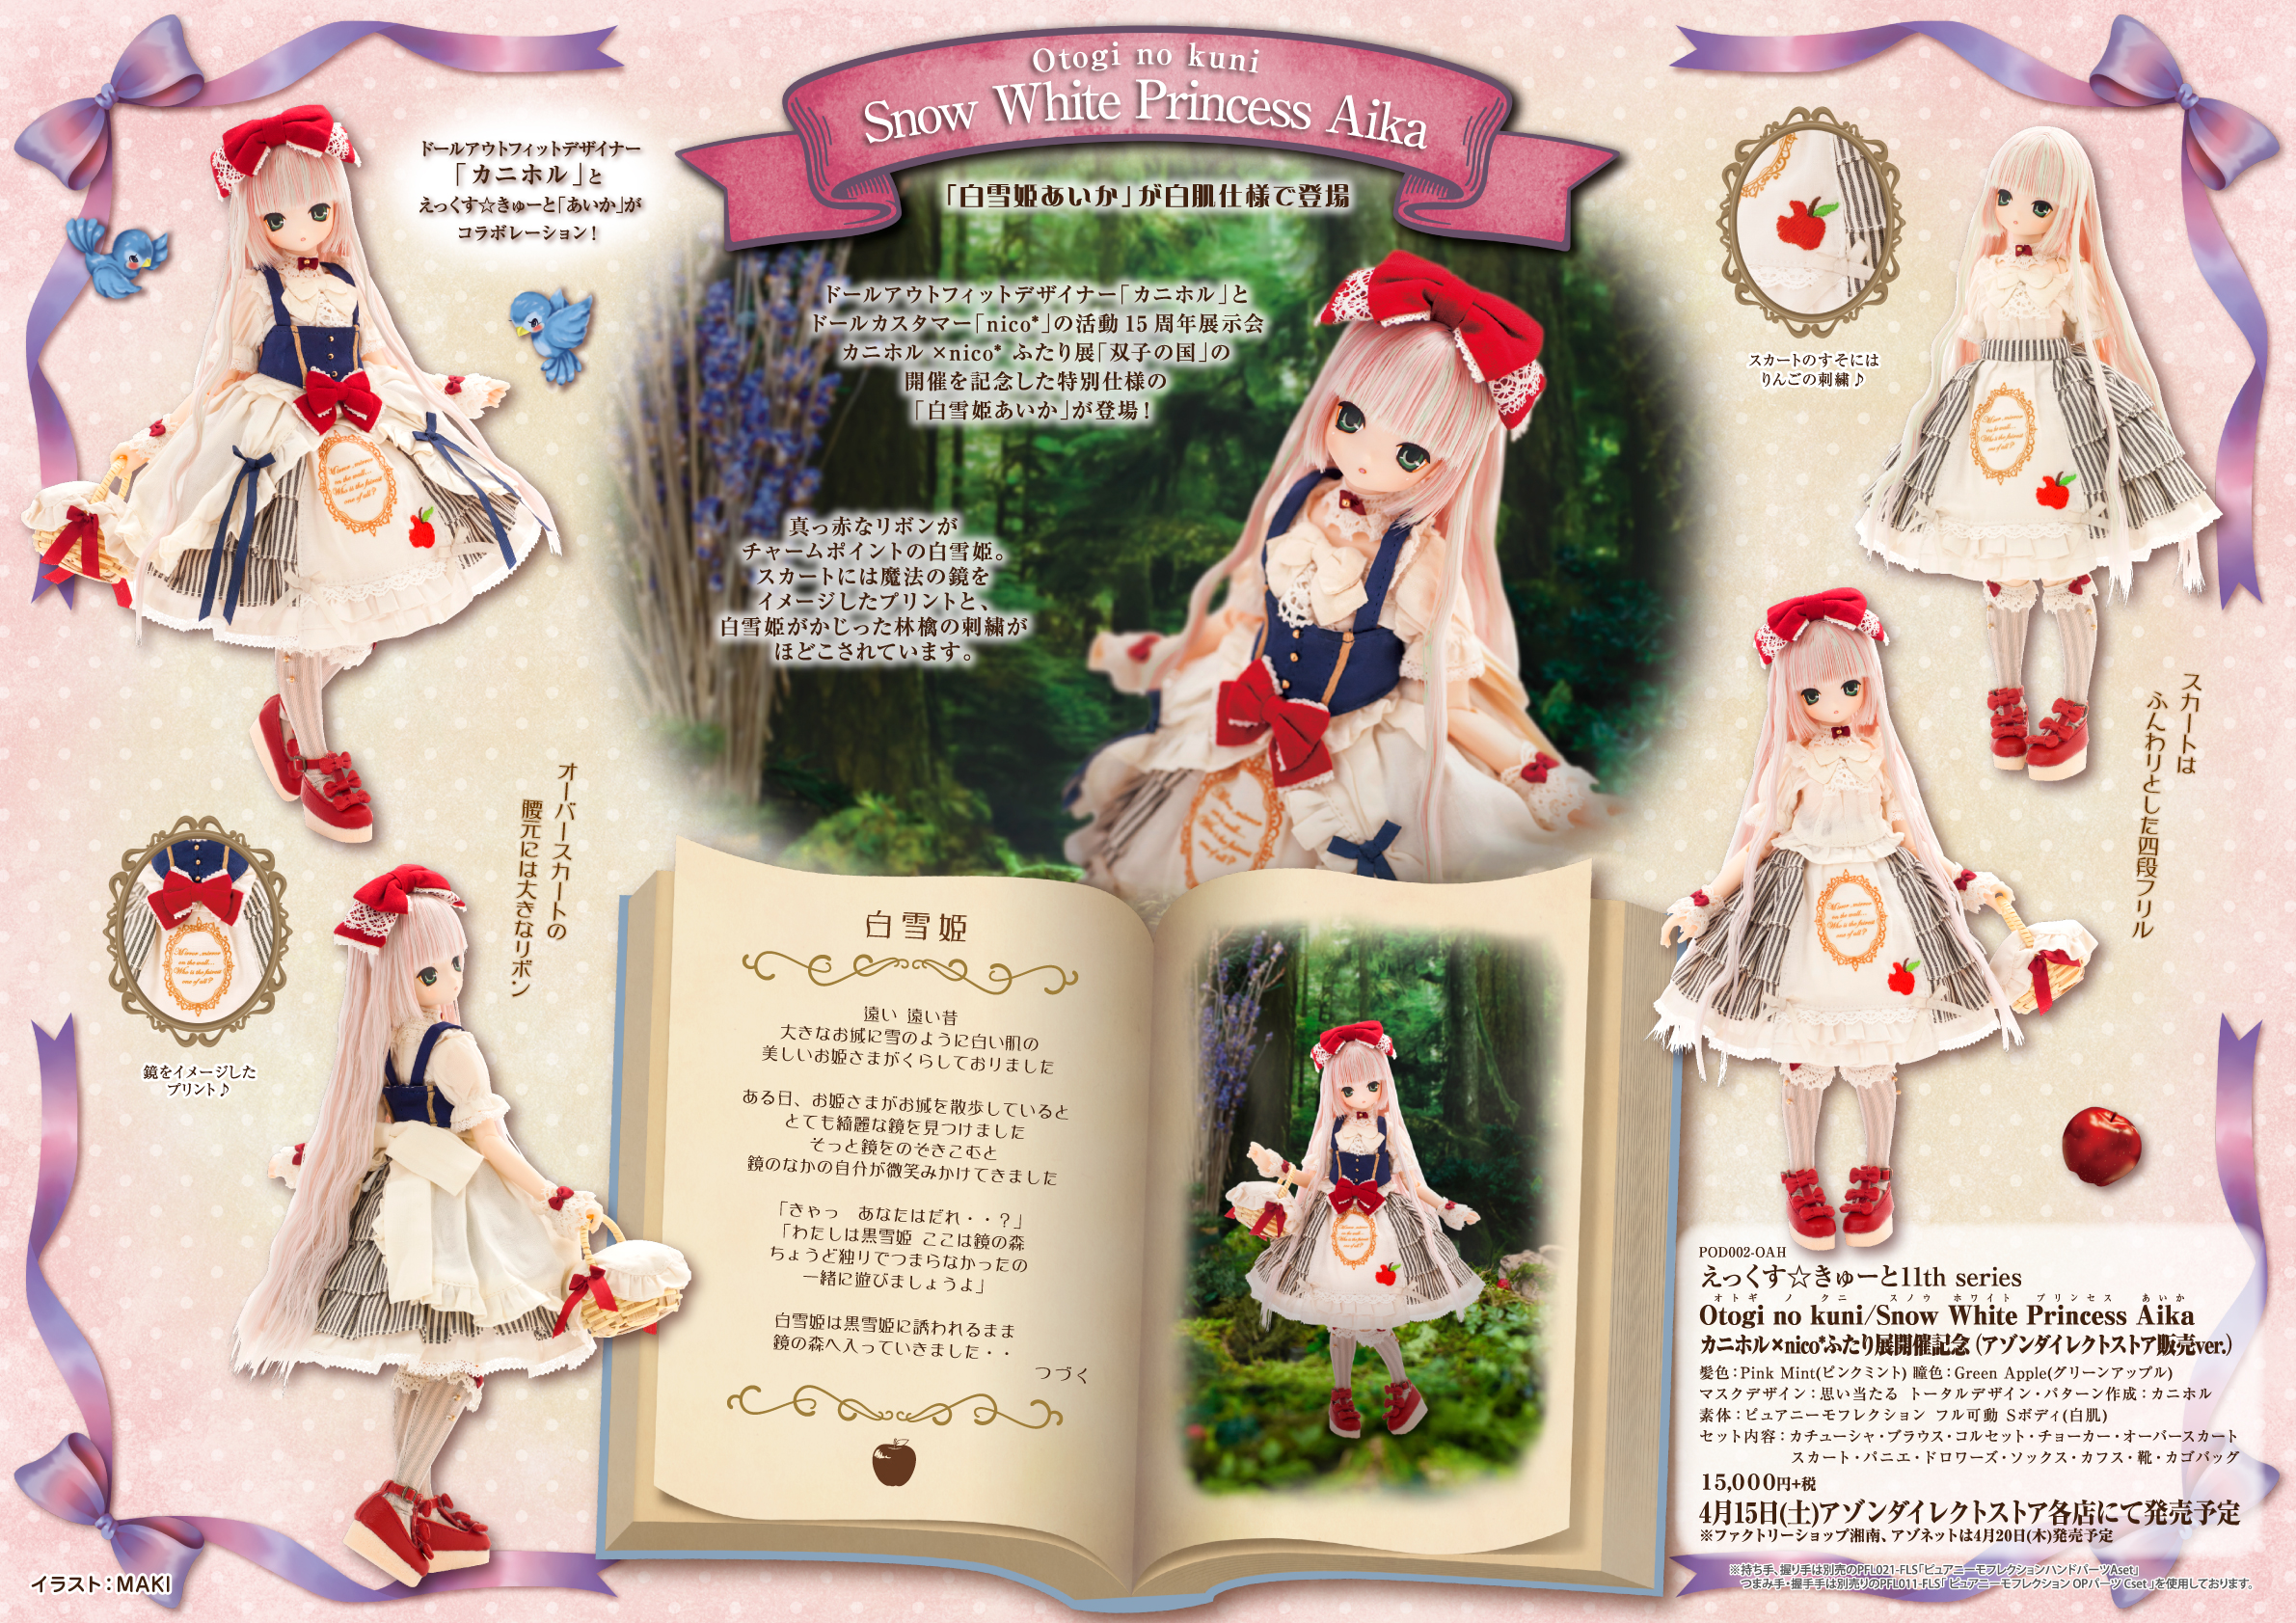 Snow White Princess Aikaカニホル×nicoふたり展開催記念